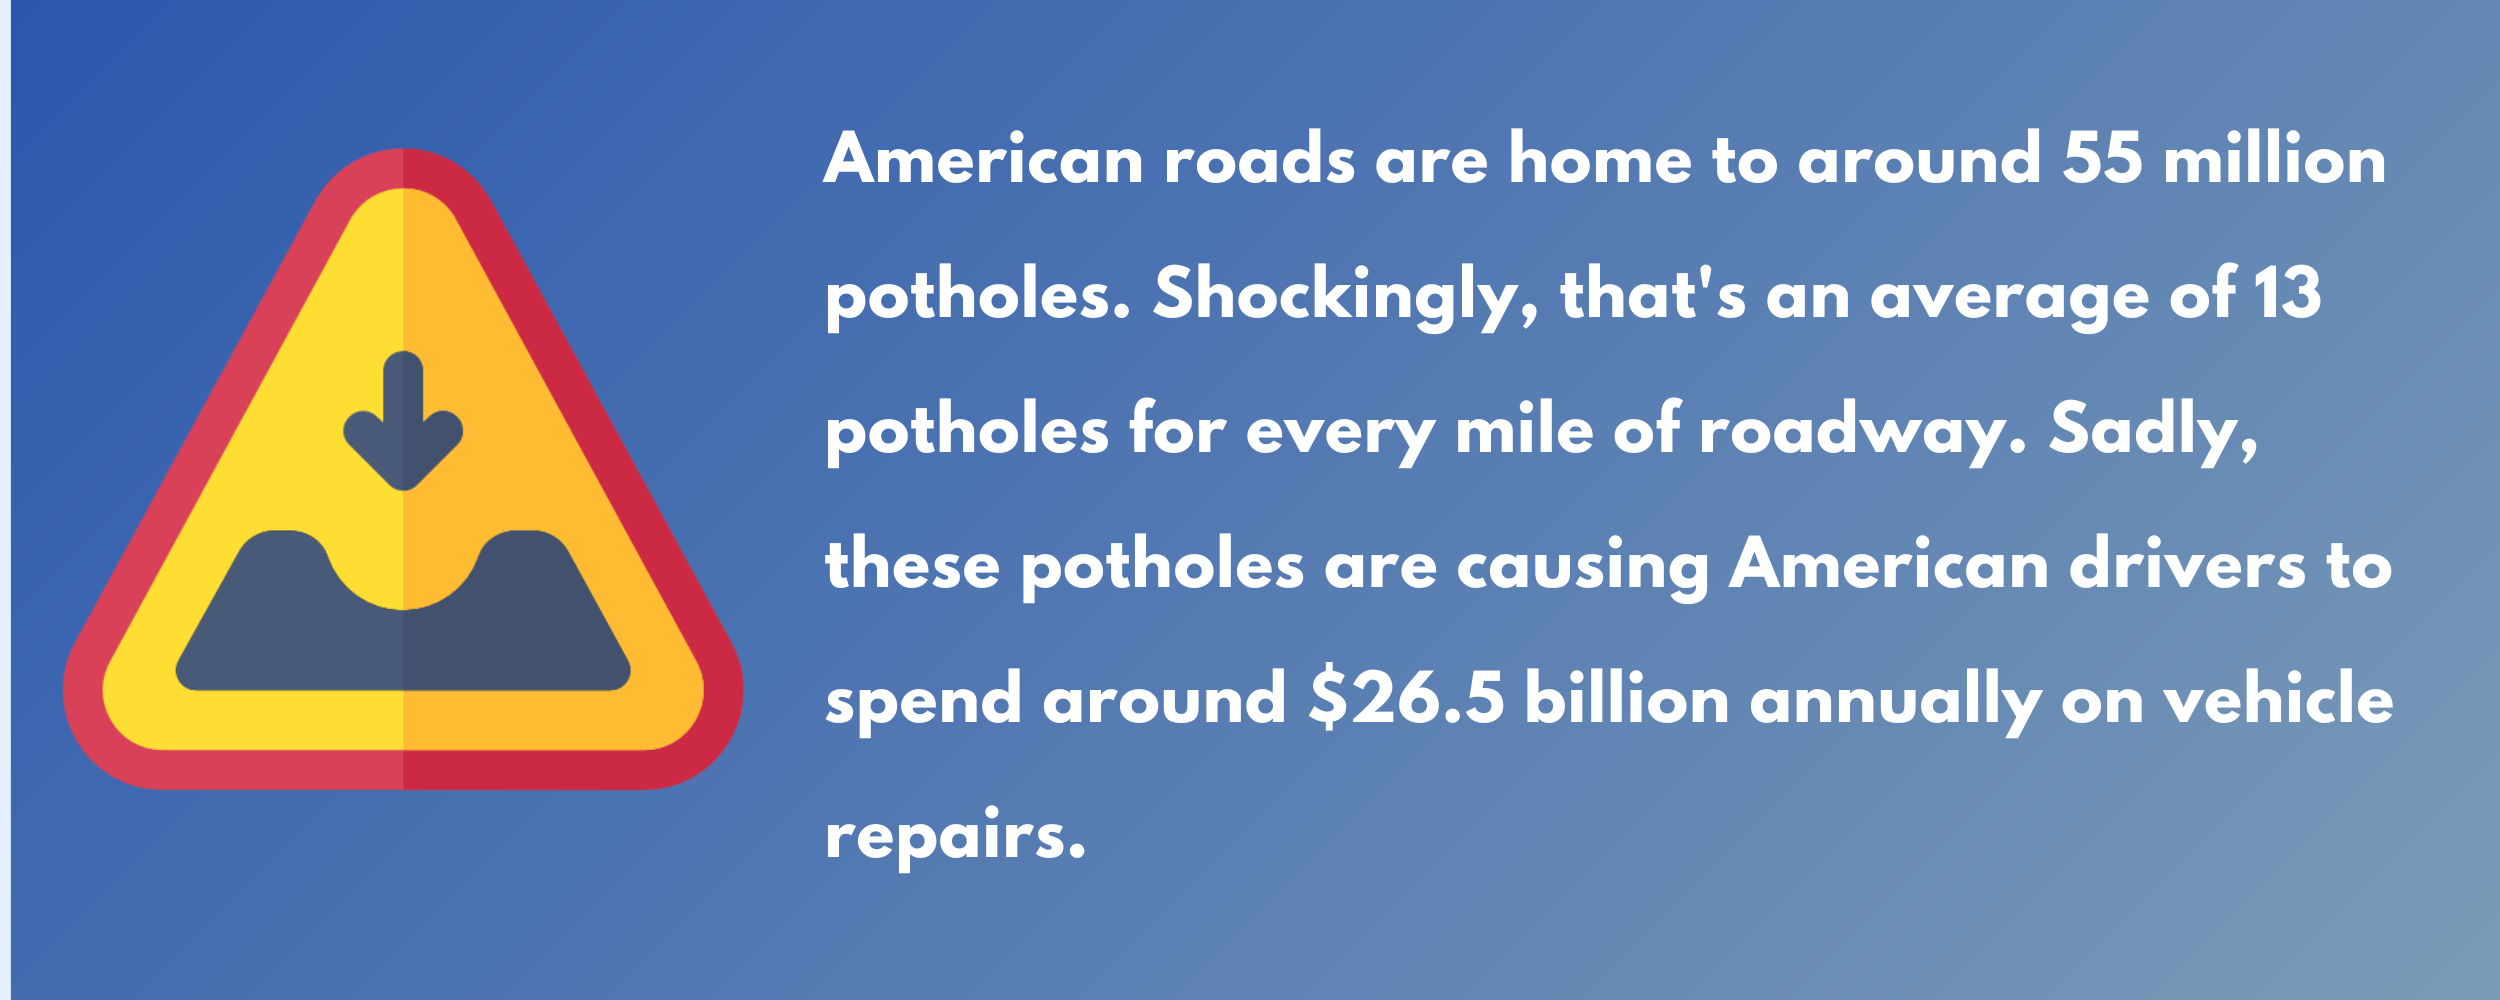 how many potholes on American roads and economic impact